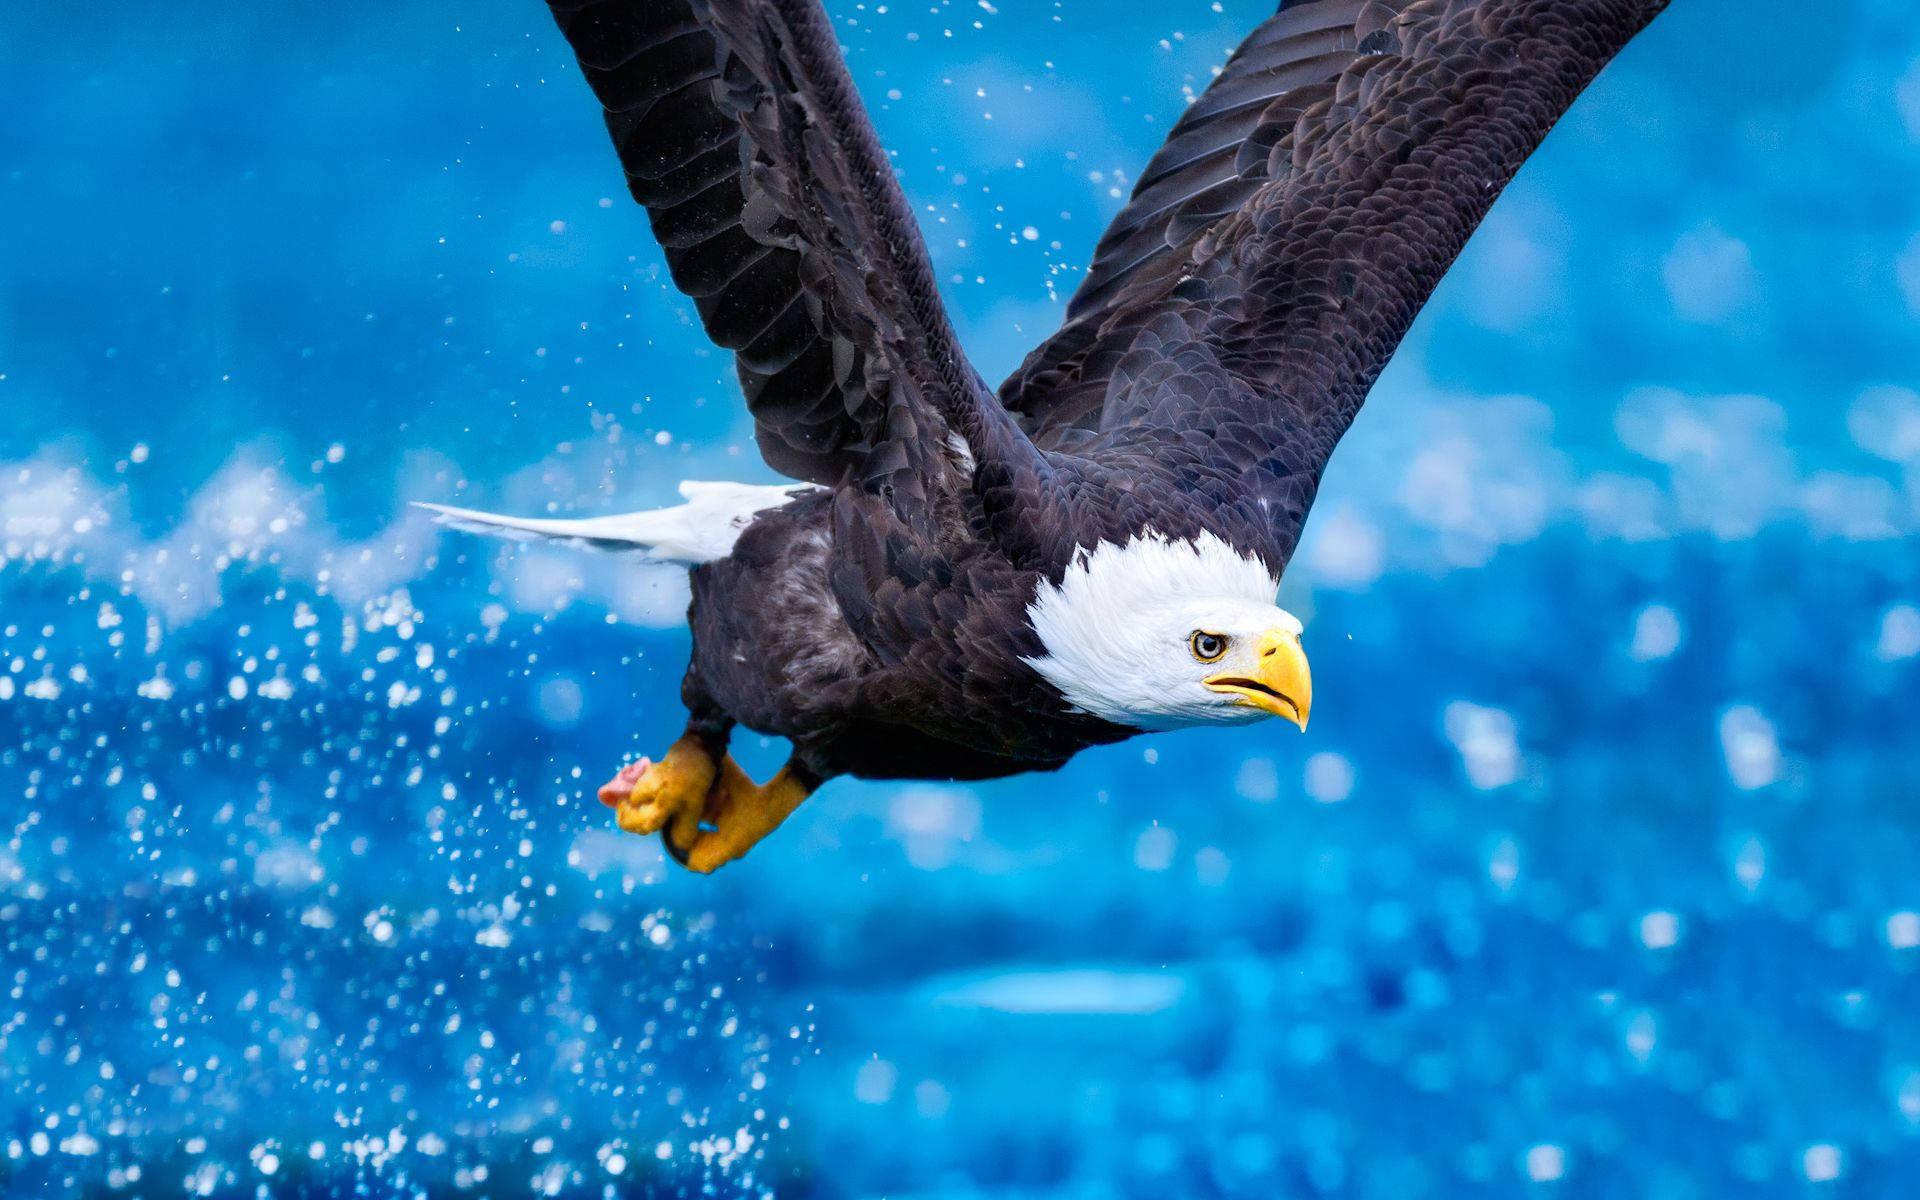 Us Eagle And Water Splash